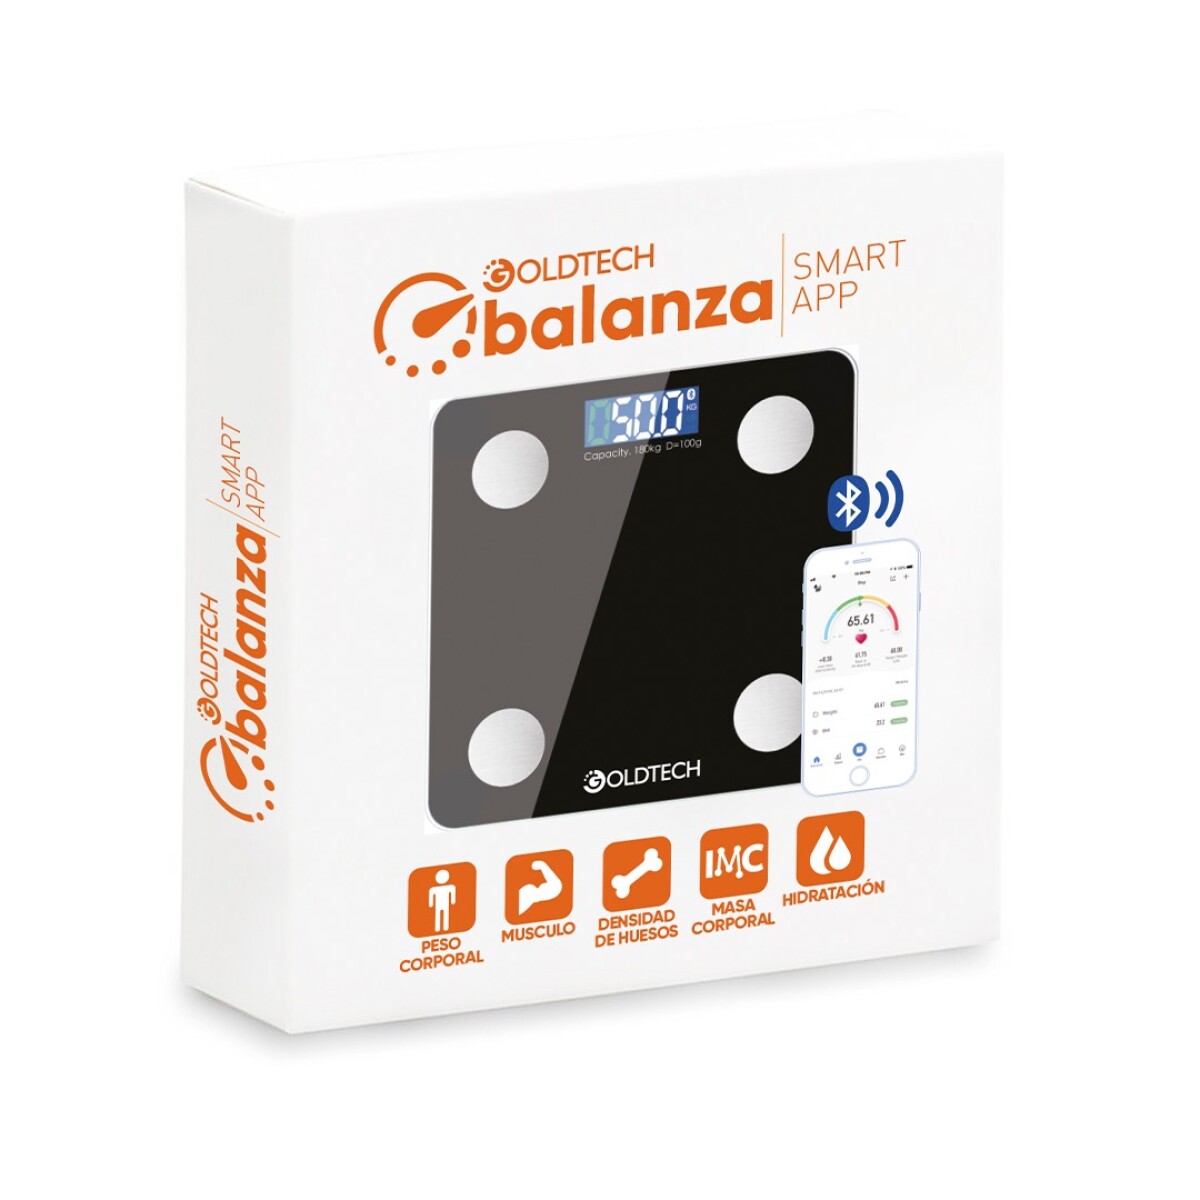 Balanza de Baño Smart Goldtech Pantalla Led y Bluetooth - 001 